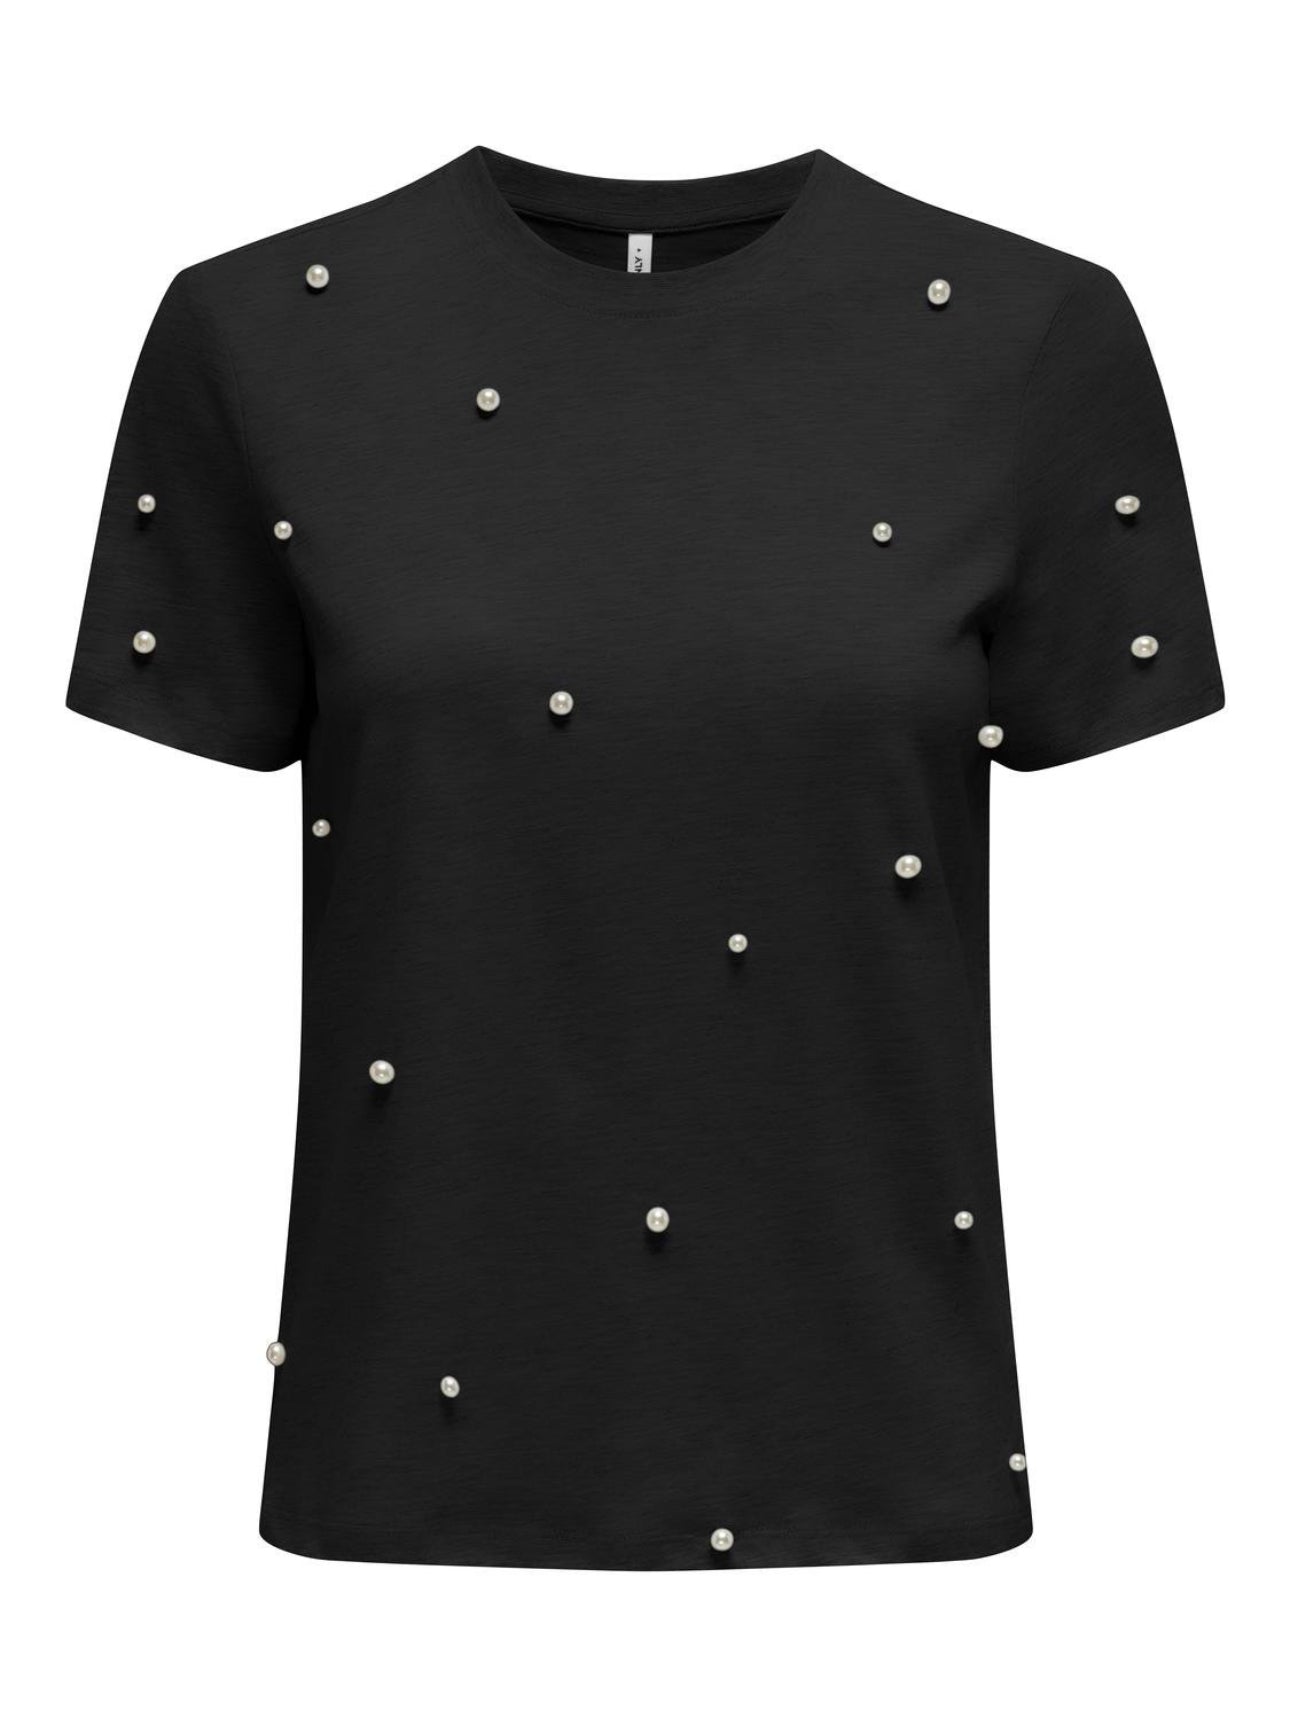 T-shirt olivia noir avec perles